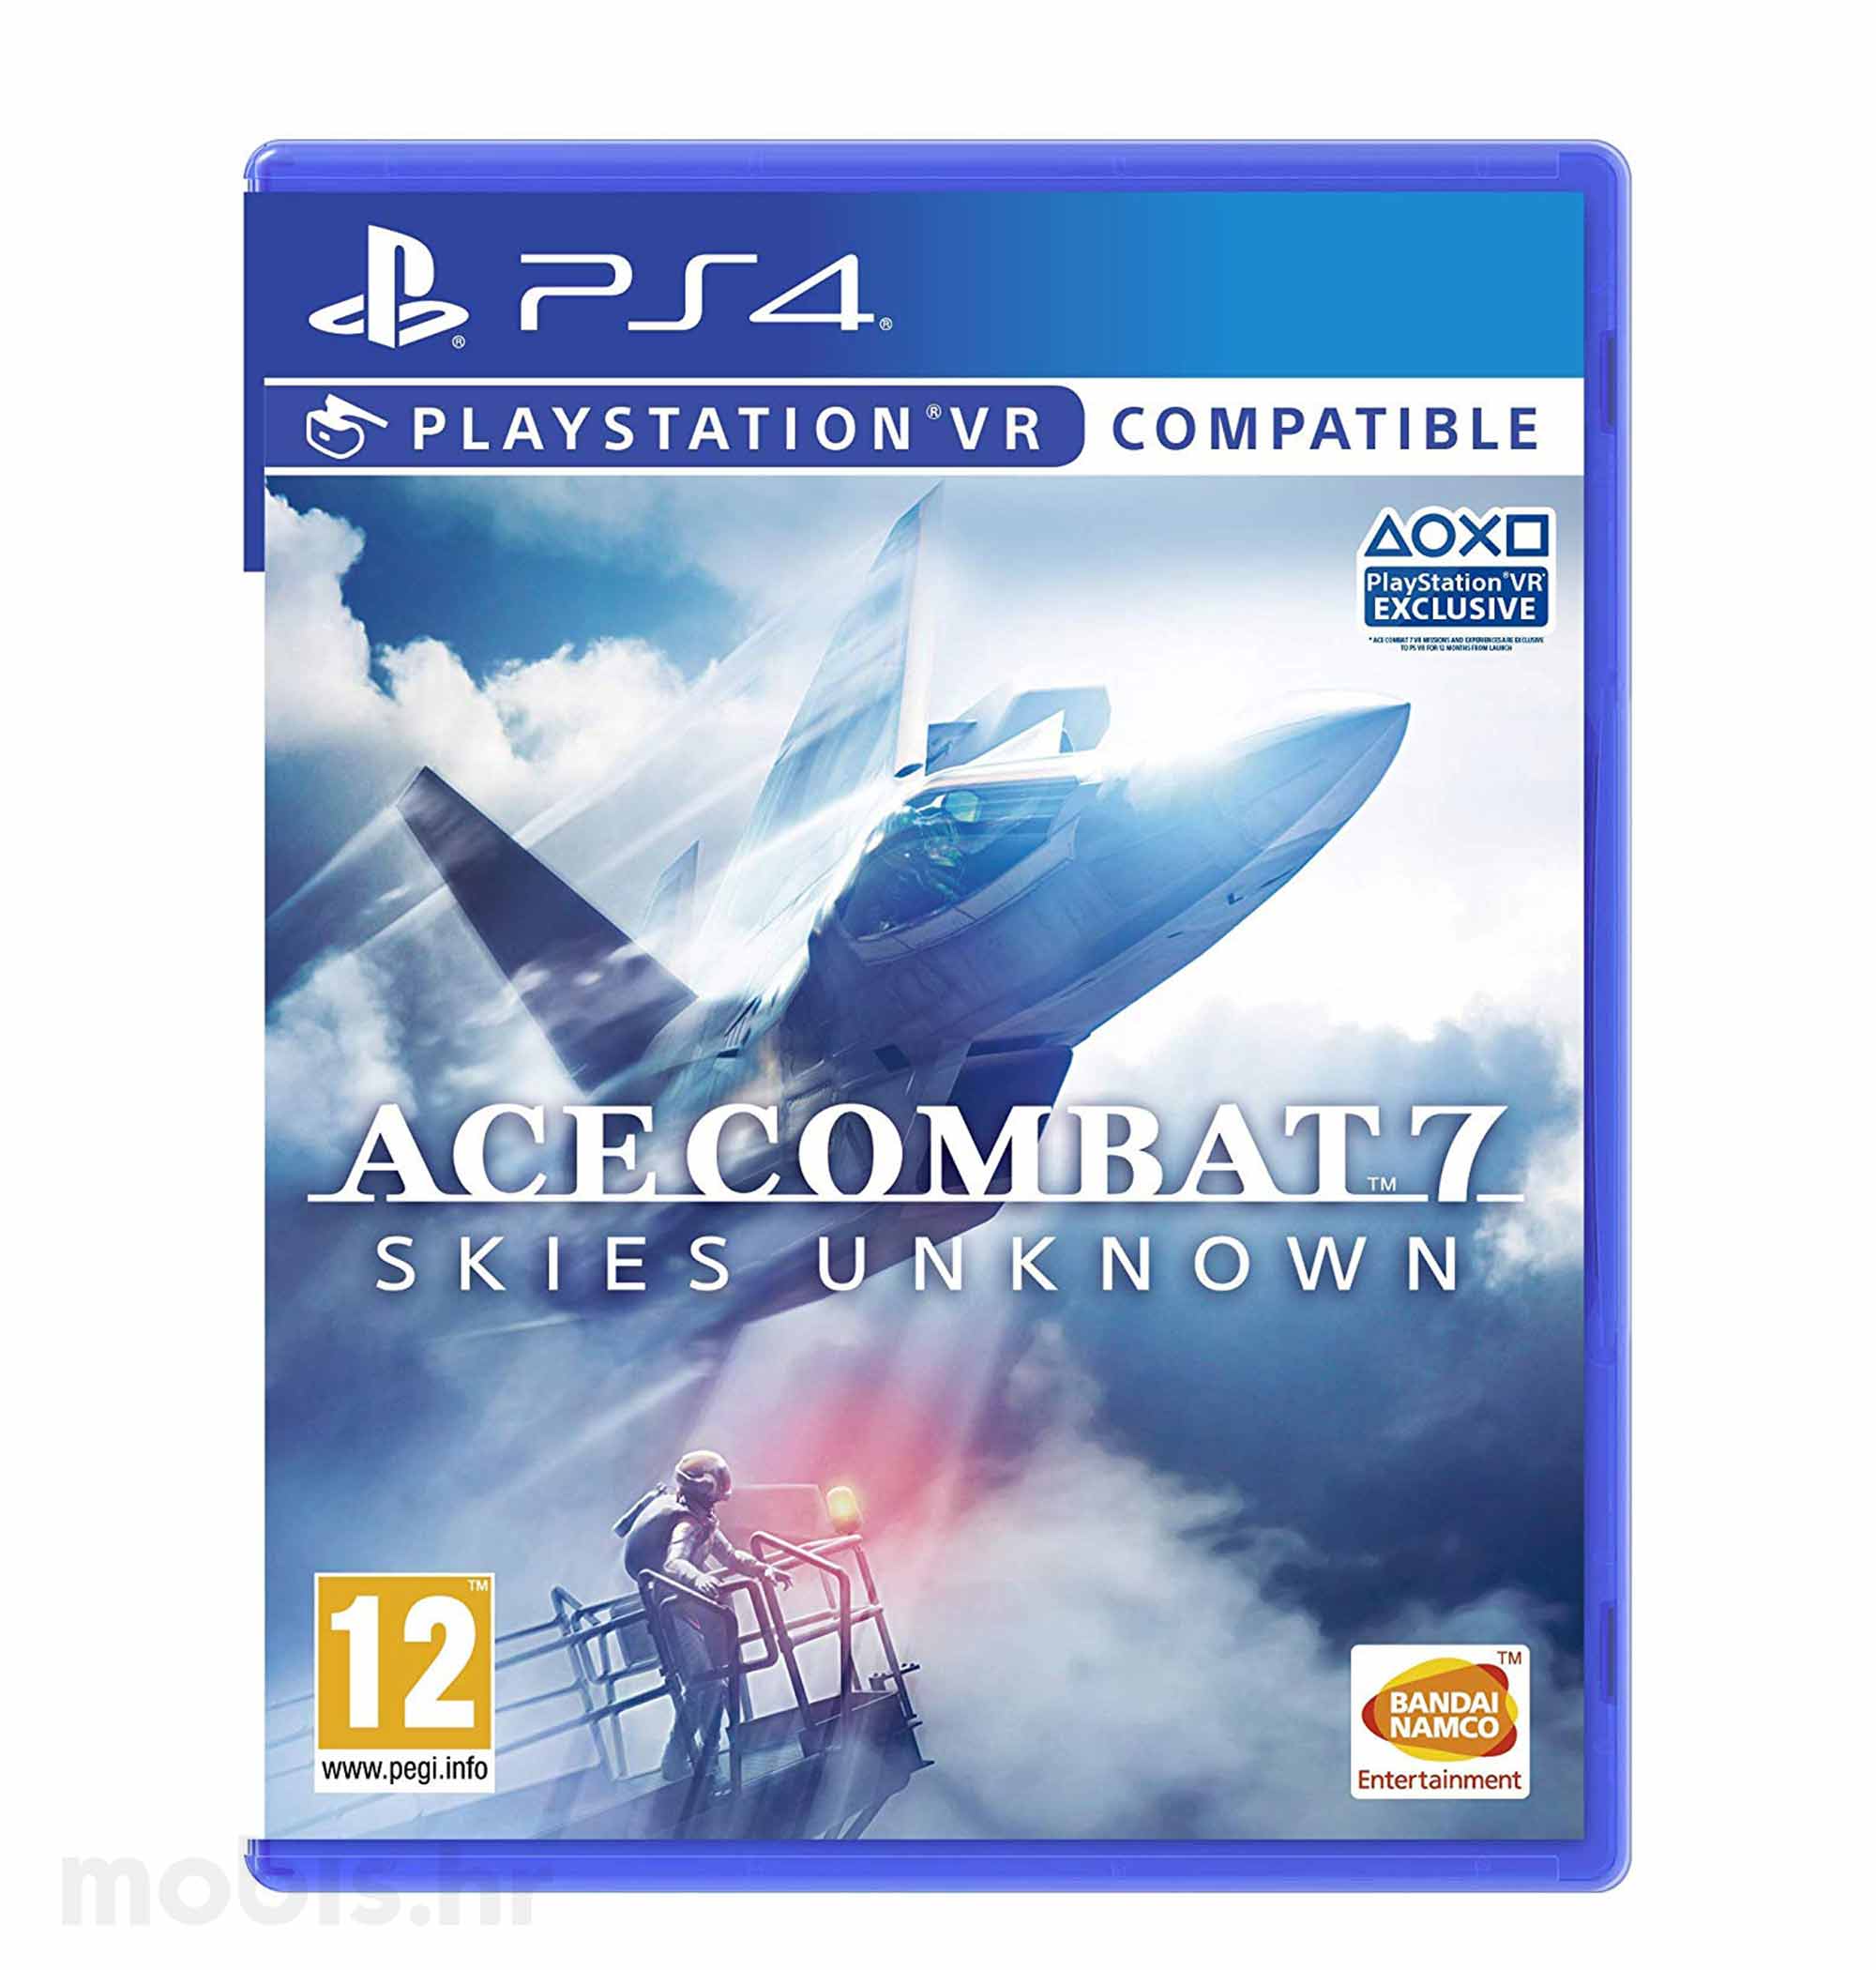 Ace combat 7 купить. Ace Combat 7 Skies Unknown PLAYSTATION 4. Ace Combat 7 обложка. Ace Combat 7 Михаэль. Ace Combat 7: Skies Unknown (поддержка PS VR) [ps4, русские субтитры].